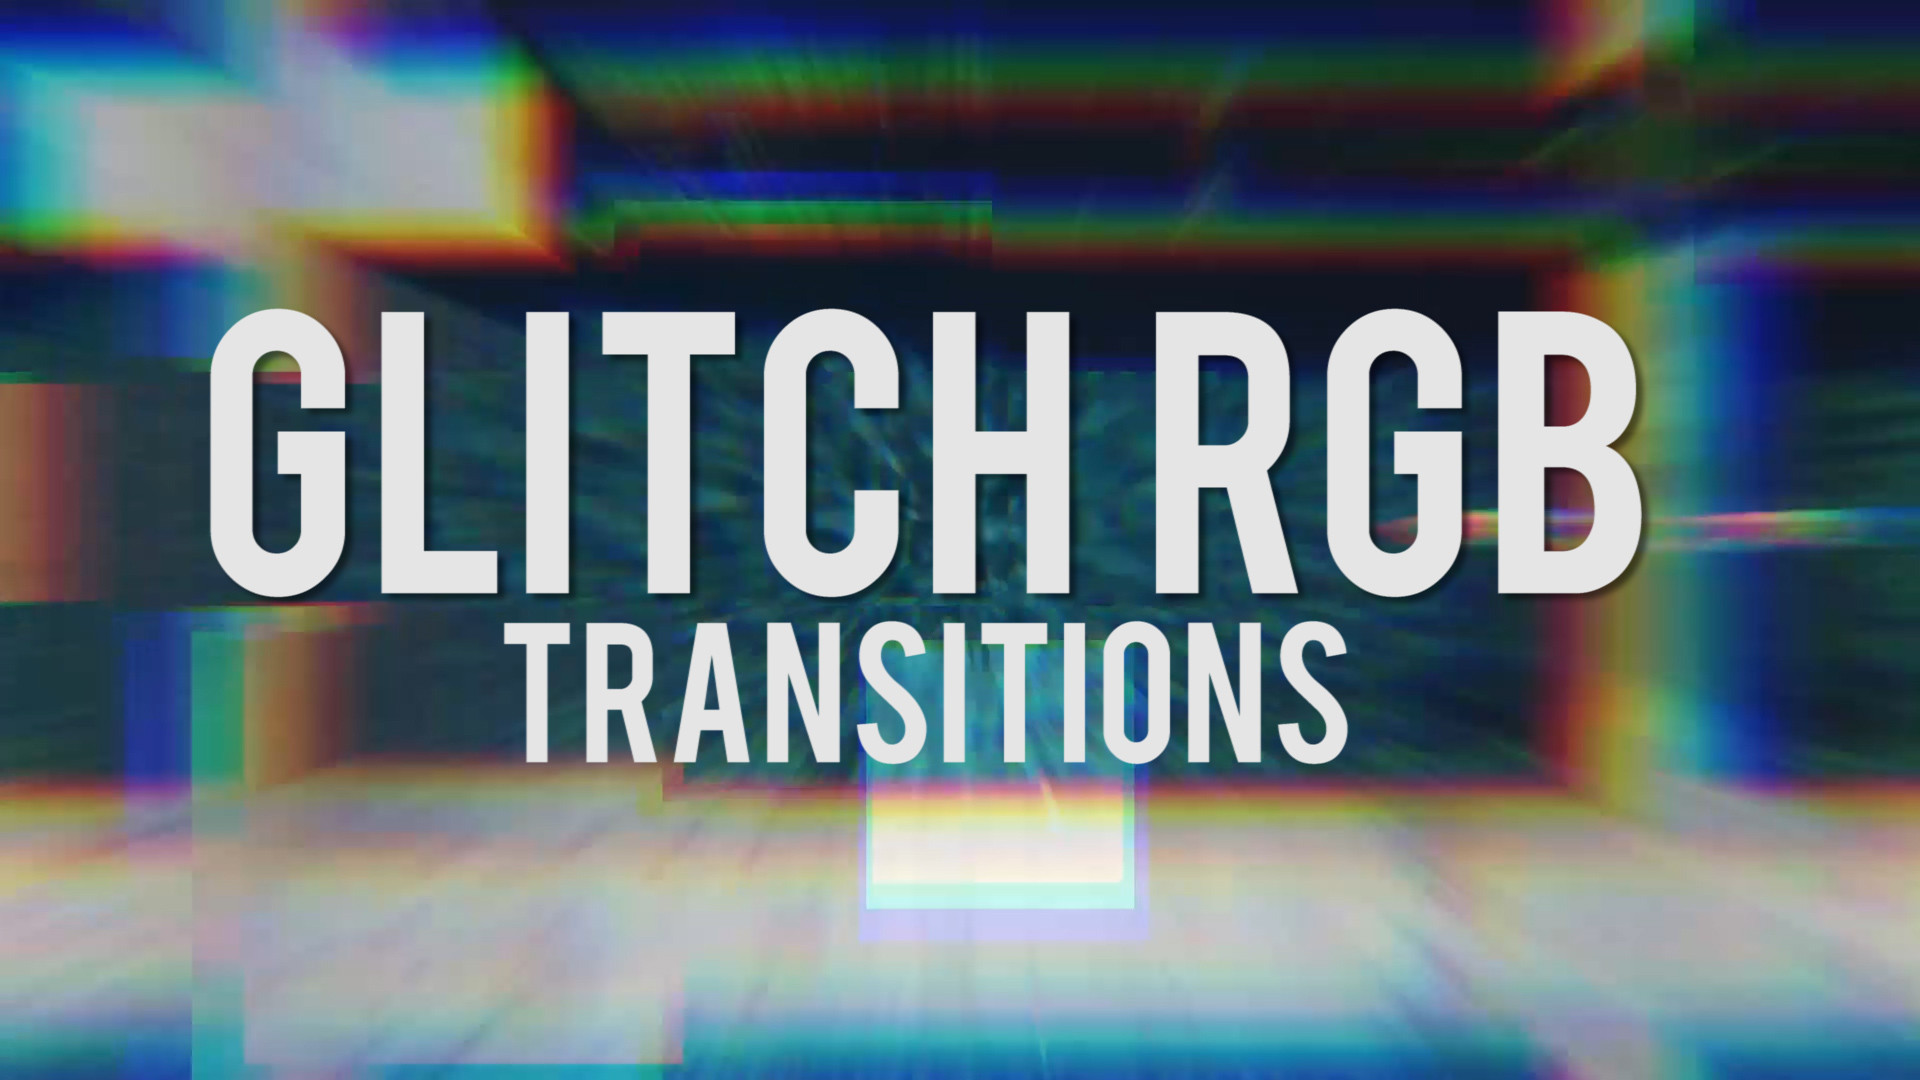 glitch transitions davinci resolve free download